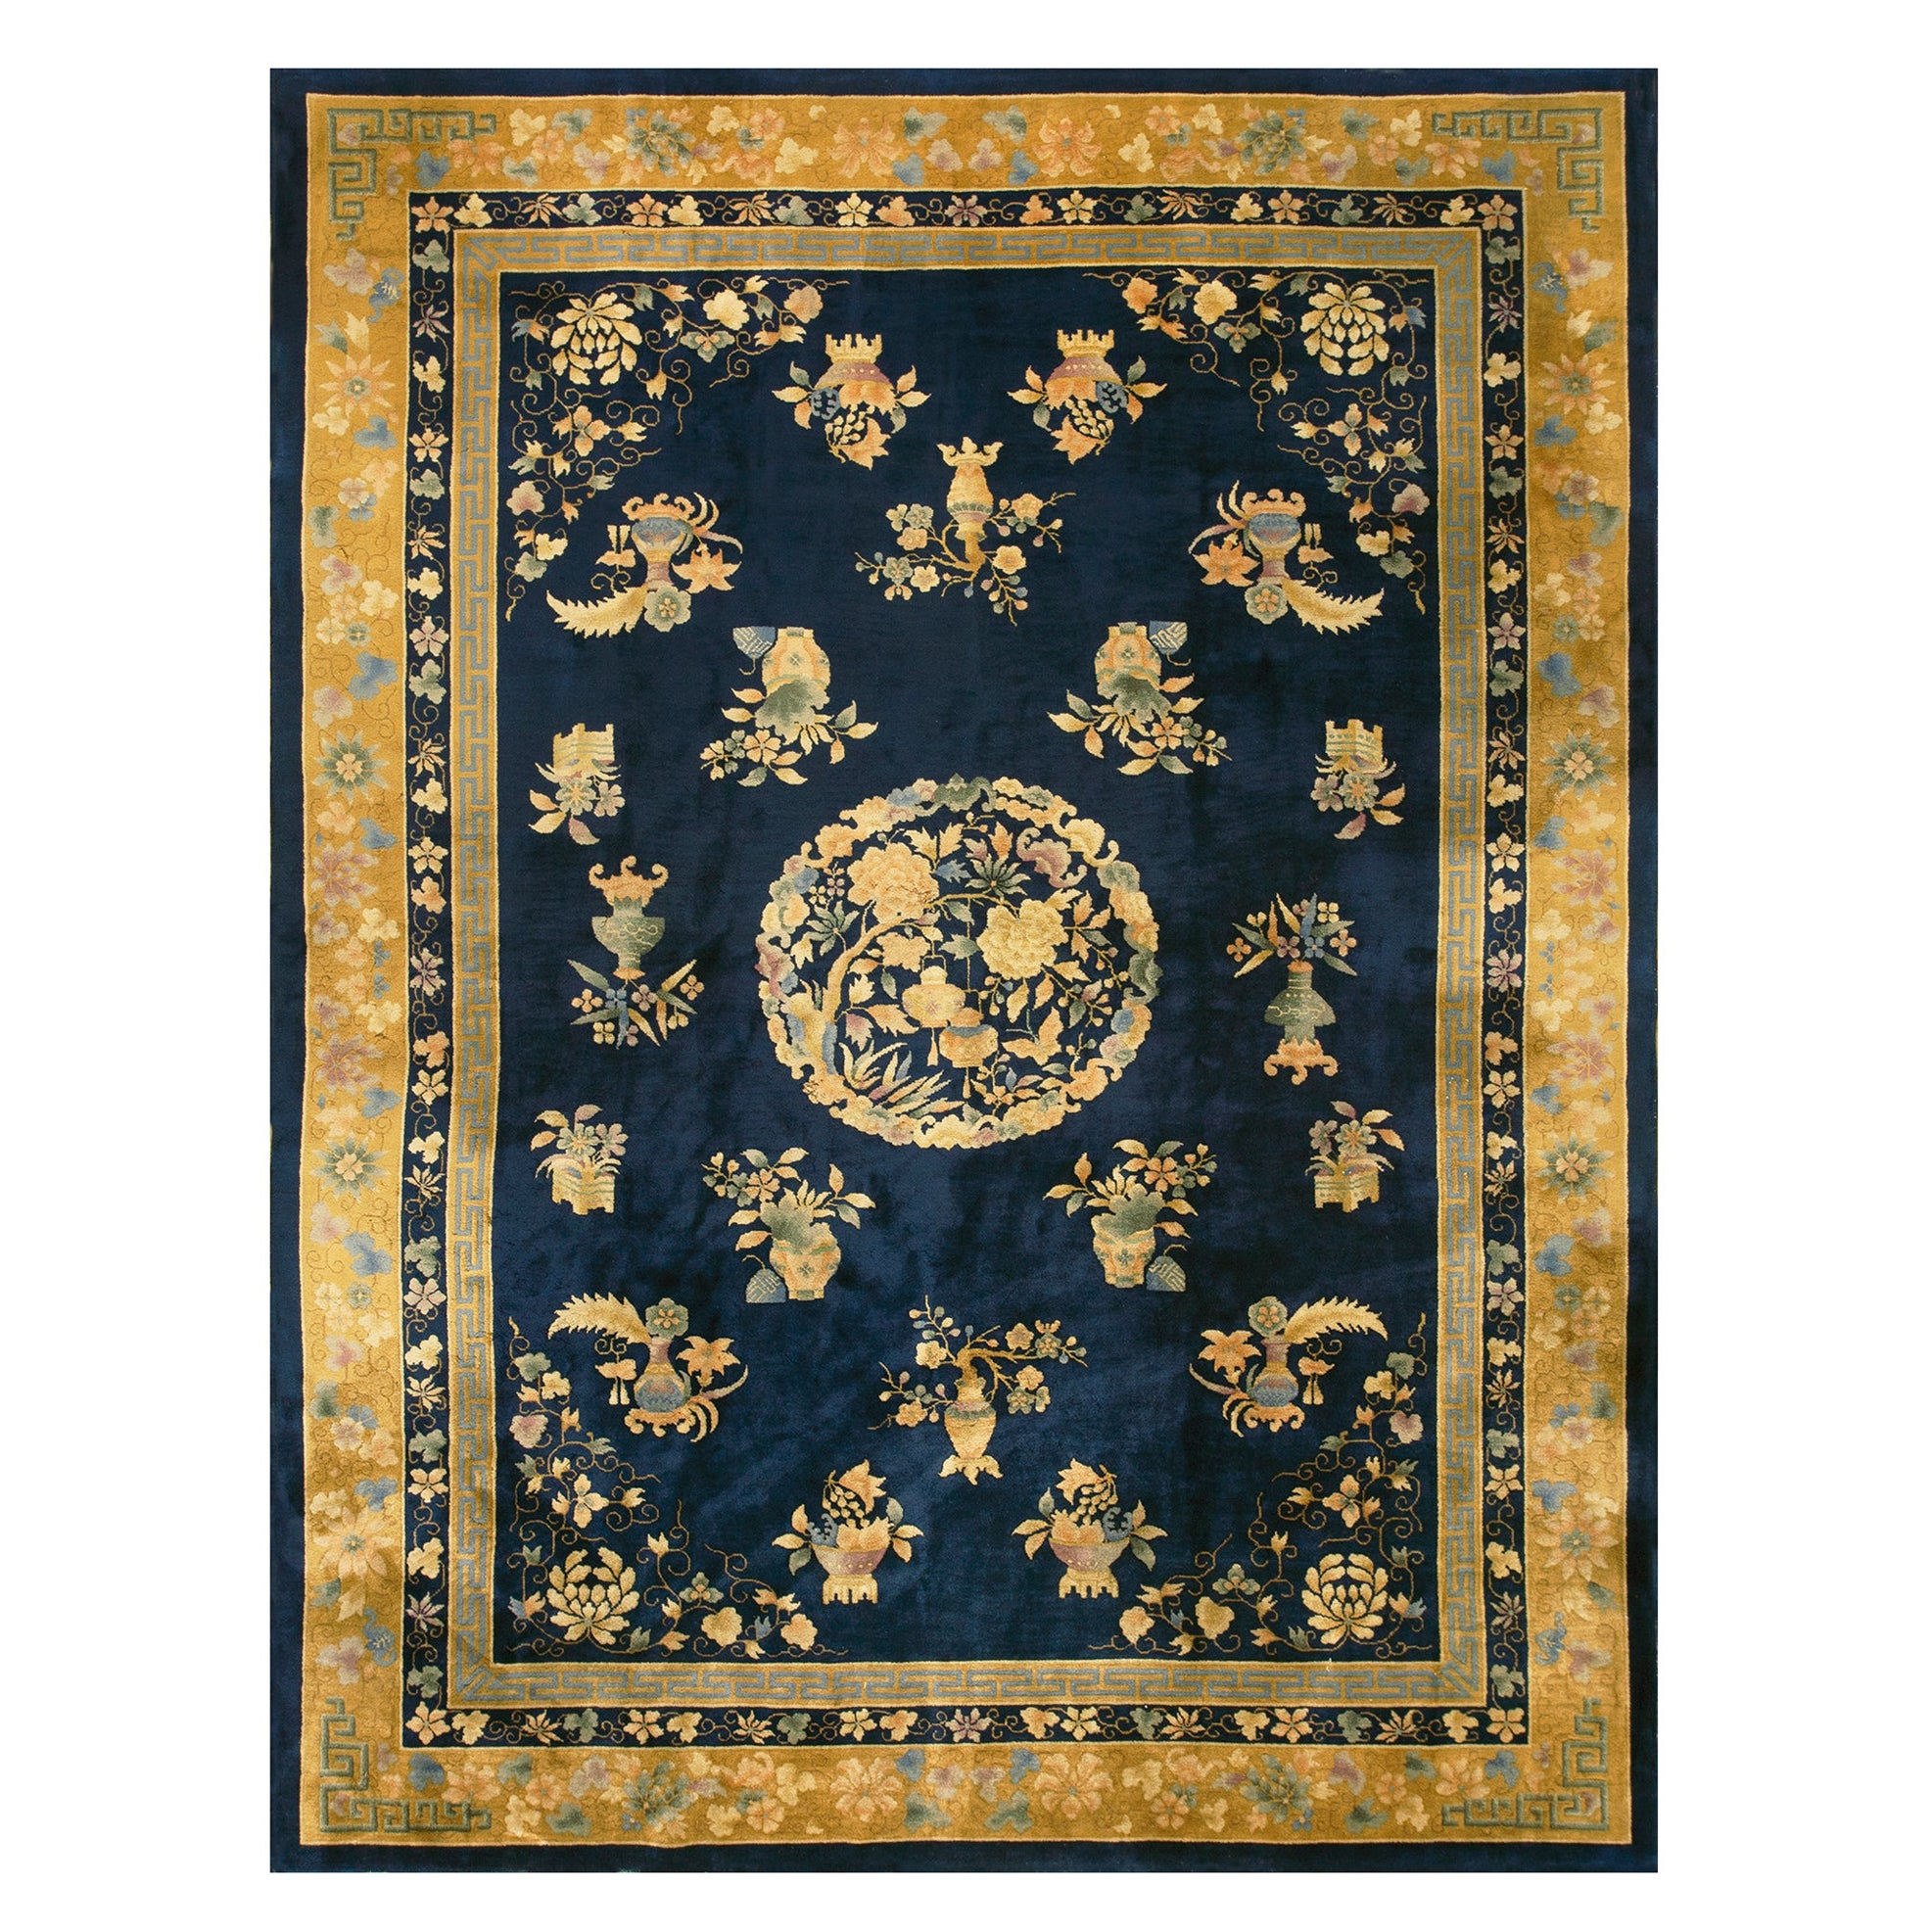 1920s Chinese Art Deco Carpet ( 8' 9'' x 11' 6'' - 266 x 350 cm ) For Sale